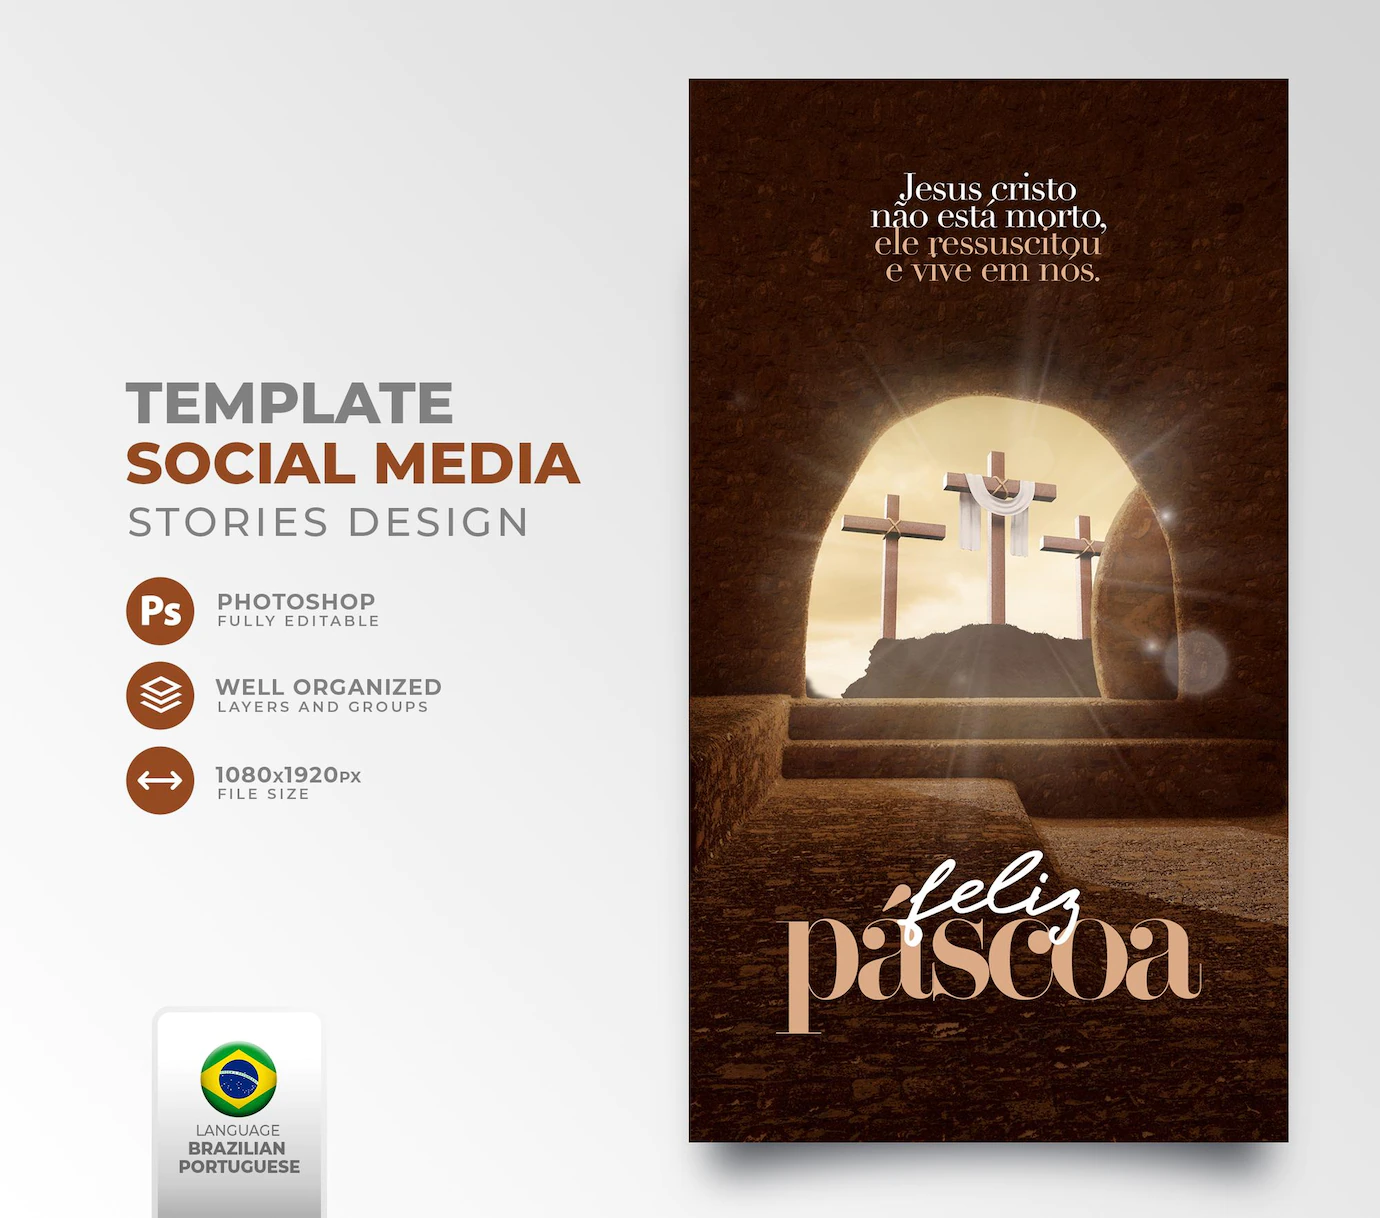 Post Social Media Happy Easter Christianity Portuguese 3d Render 363450 2494